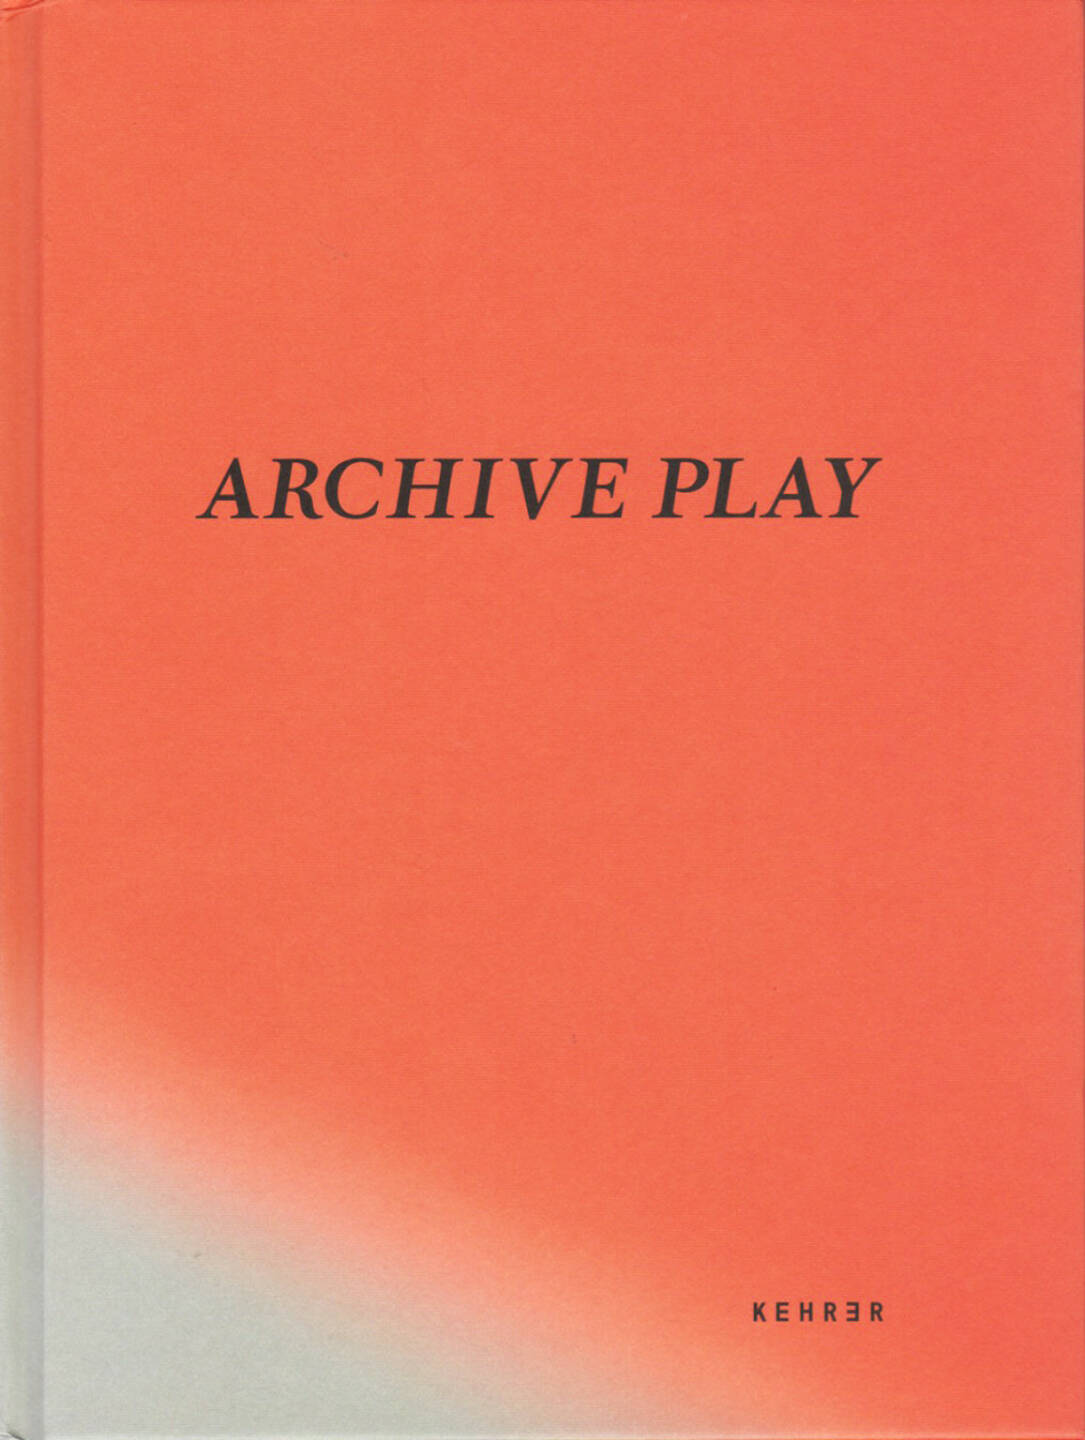 Hertta Kiiski & Niina Vatanen - Archive Play - Kehrer 2014, Cover - http://josefchladek.com/book/hertta_kiiski_niina_vatanen_-_archive_play